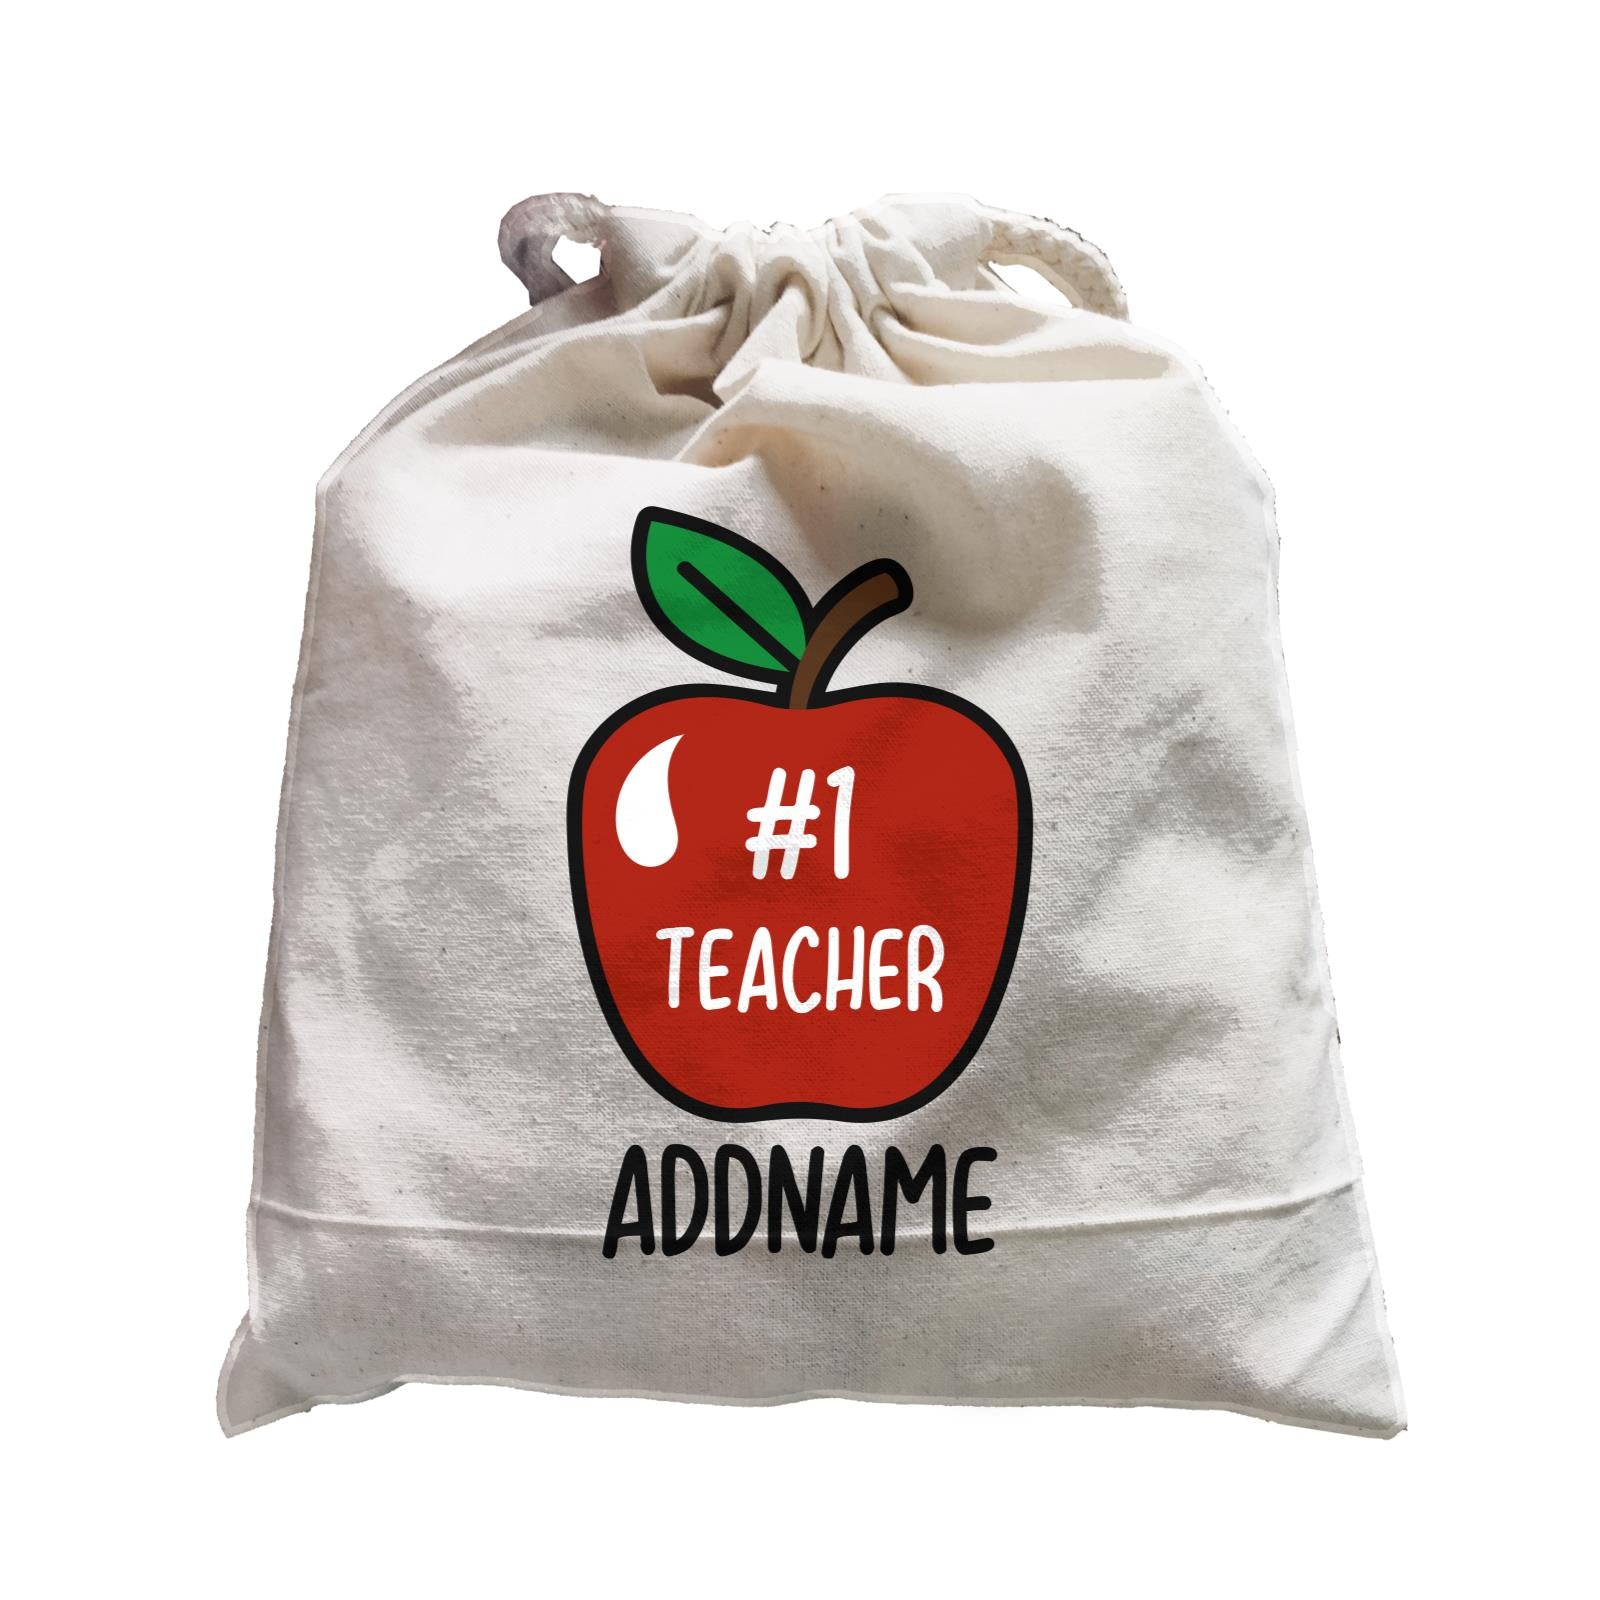 Teacher Addname Big Red Apple Hashtag 1 Teacher Addname Satchel